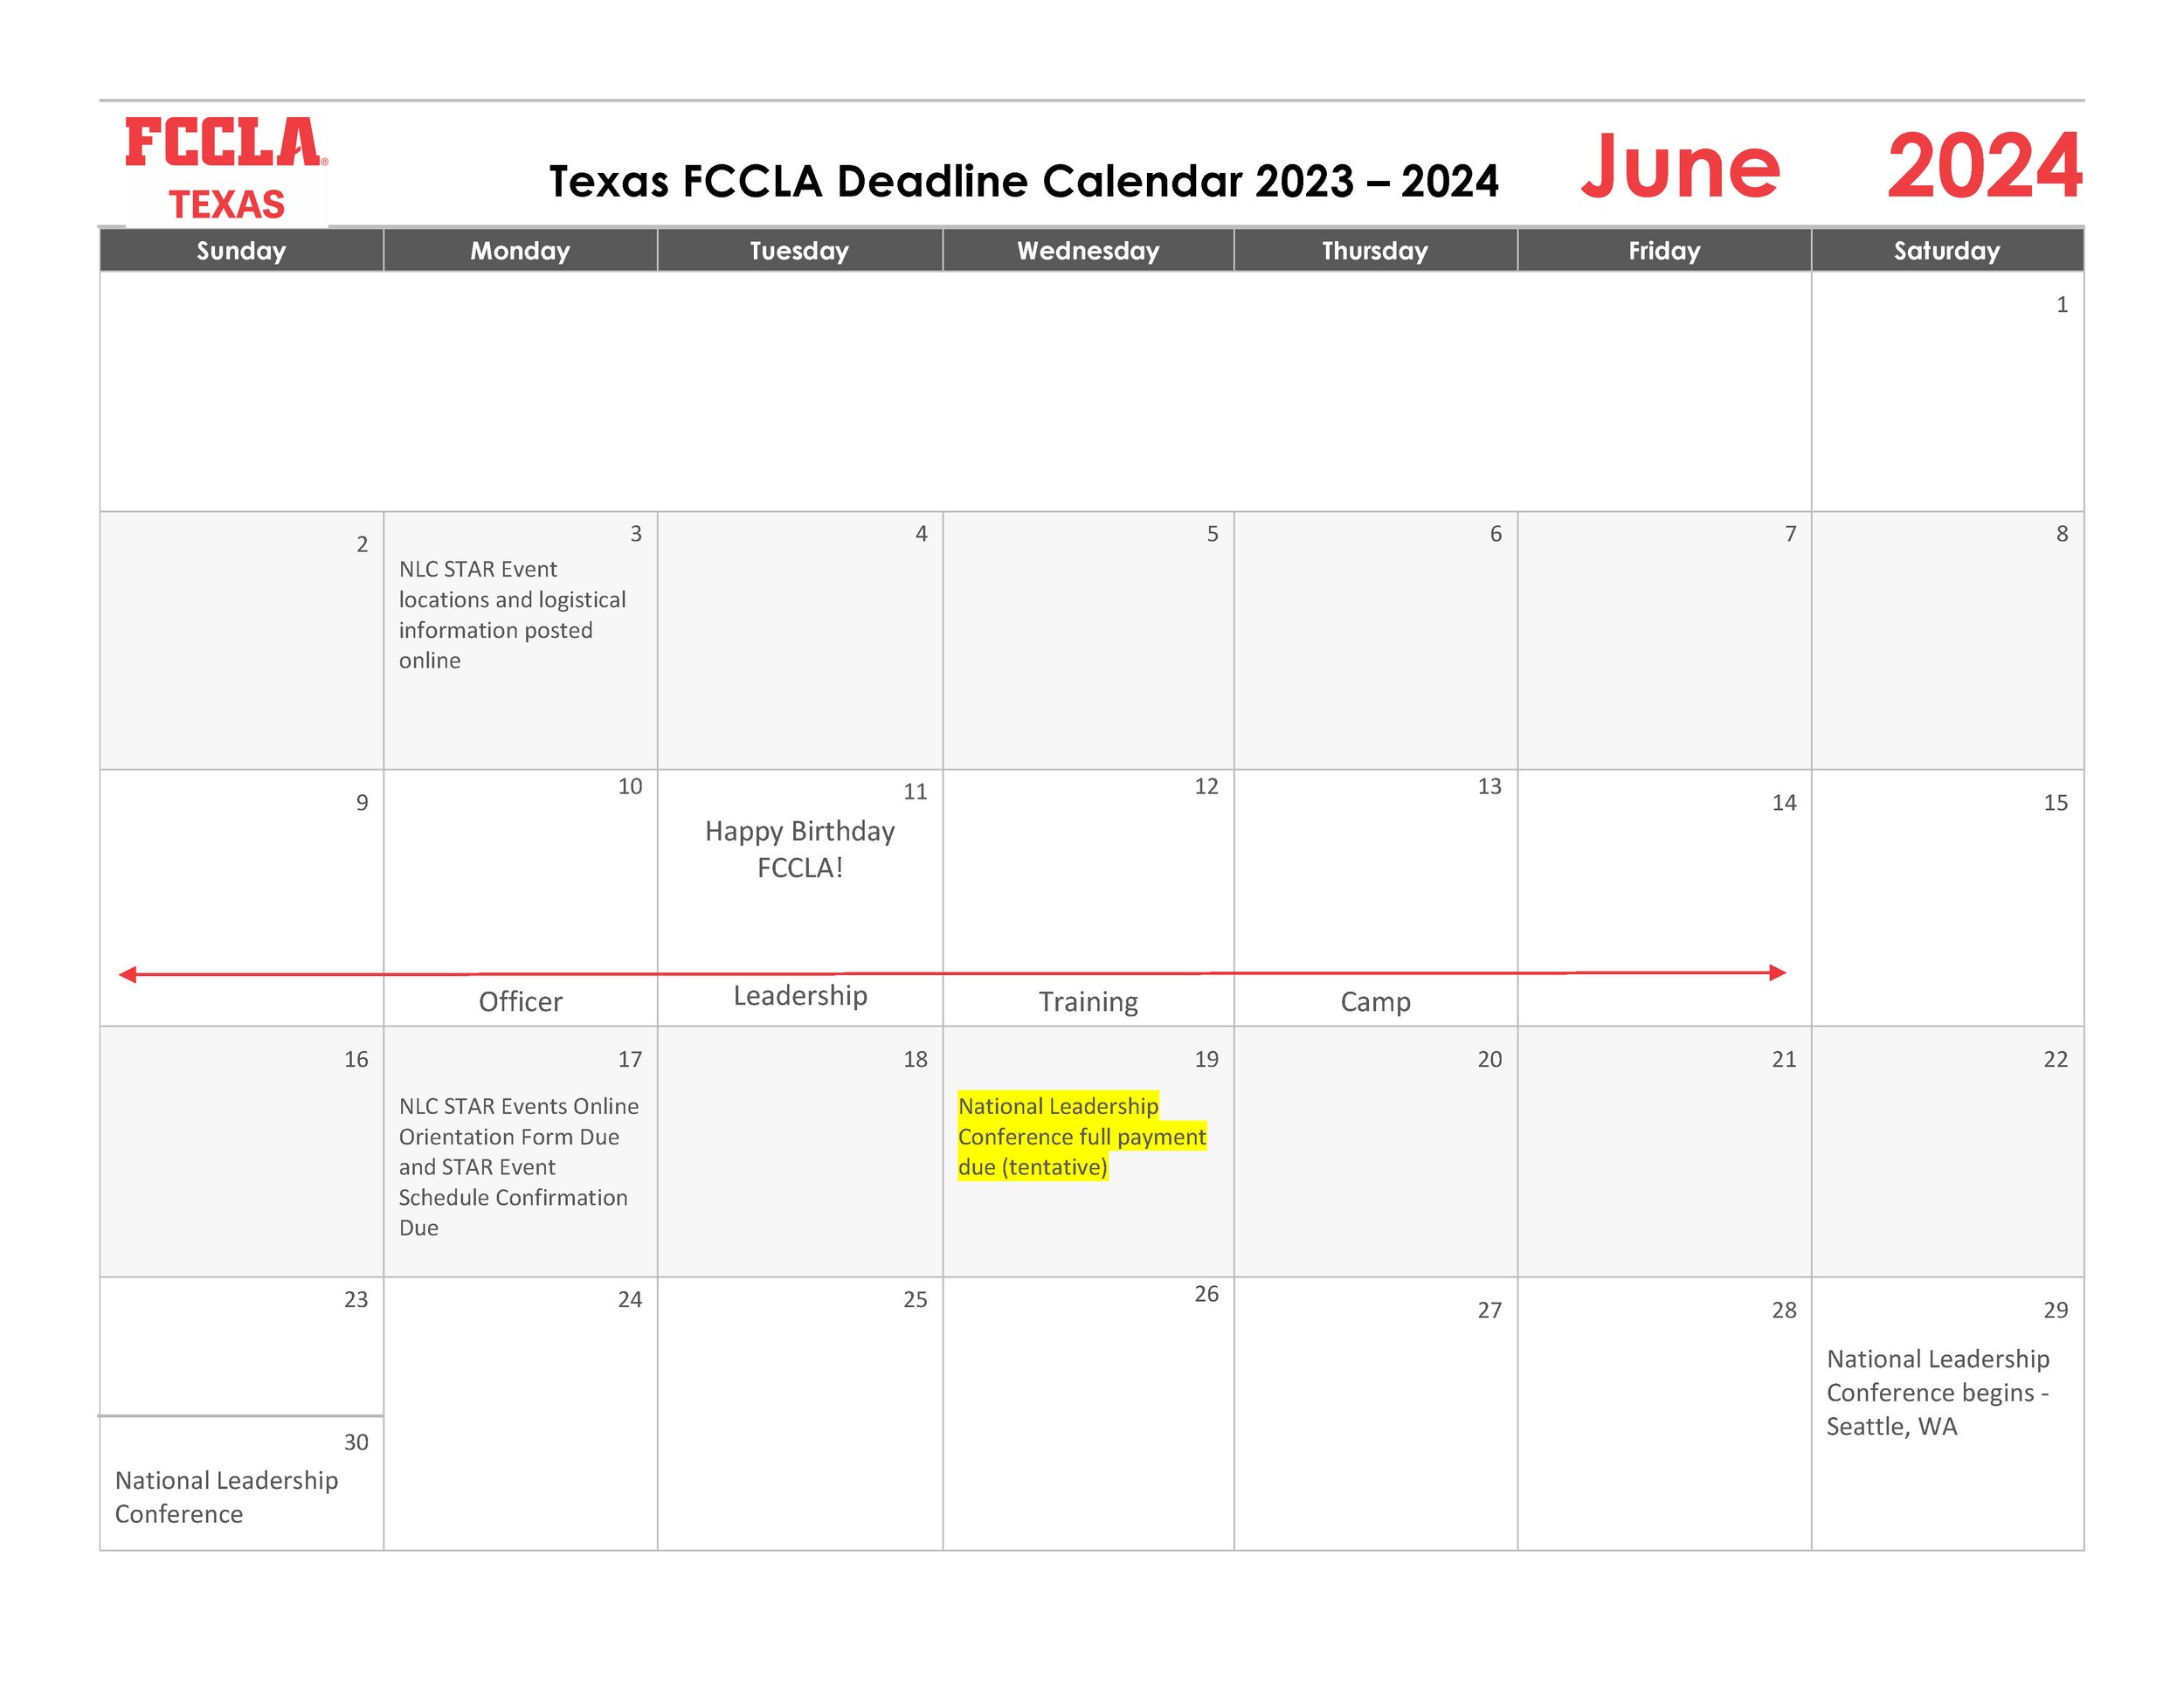 Deadline Calendar 2023 - 2024_Page_11.jpg